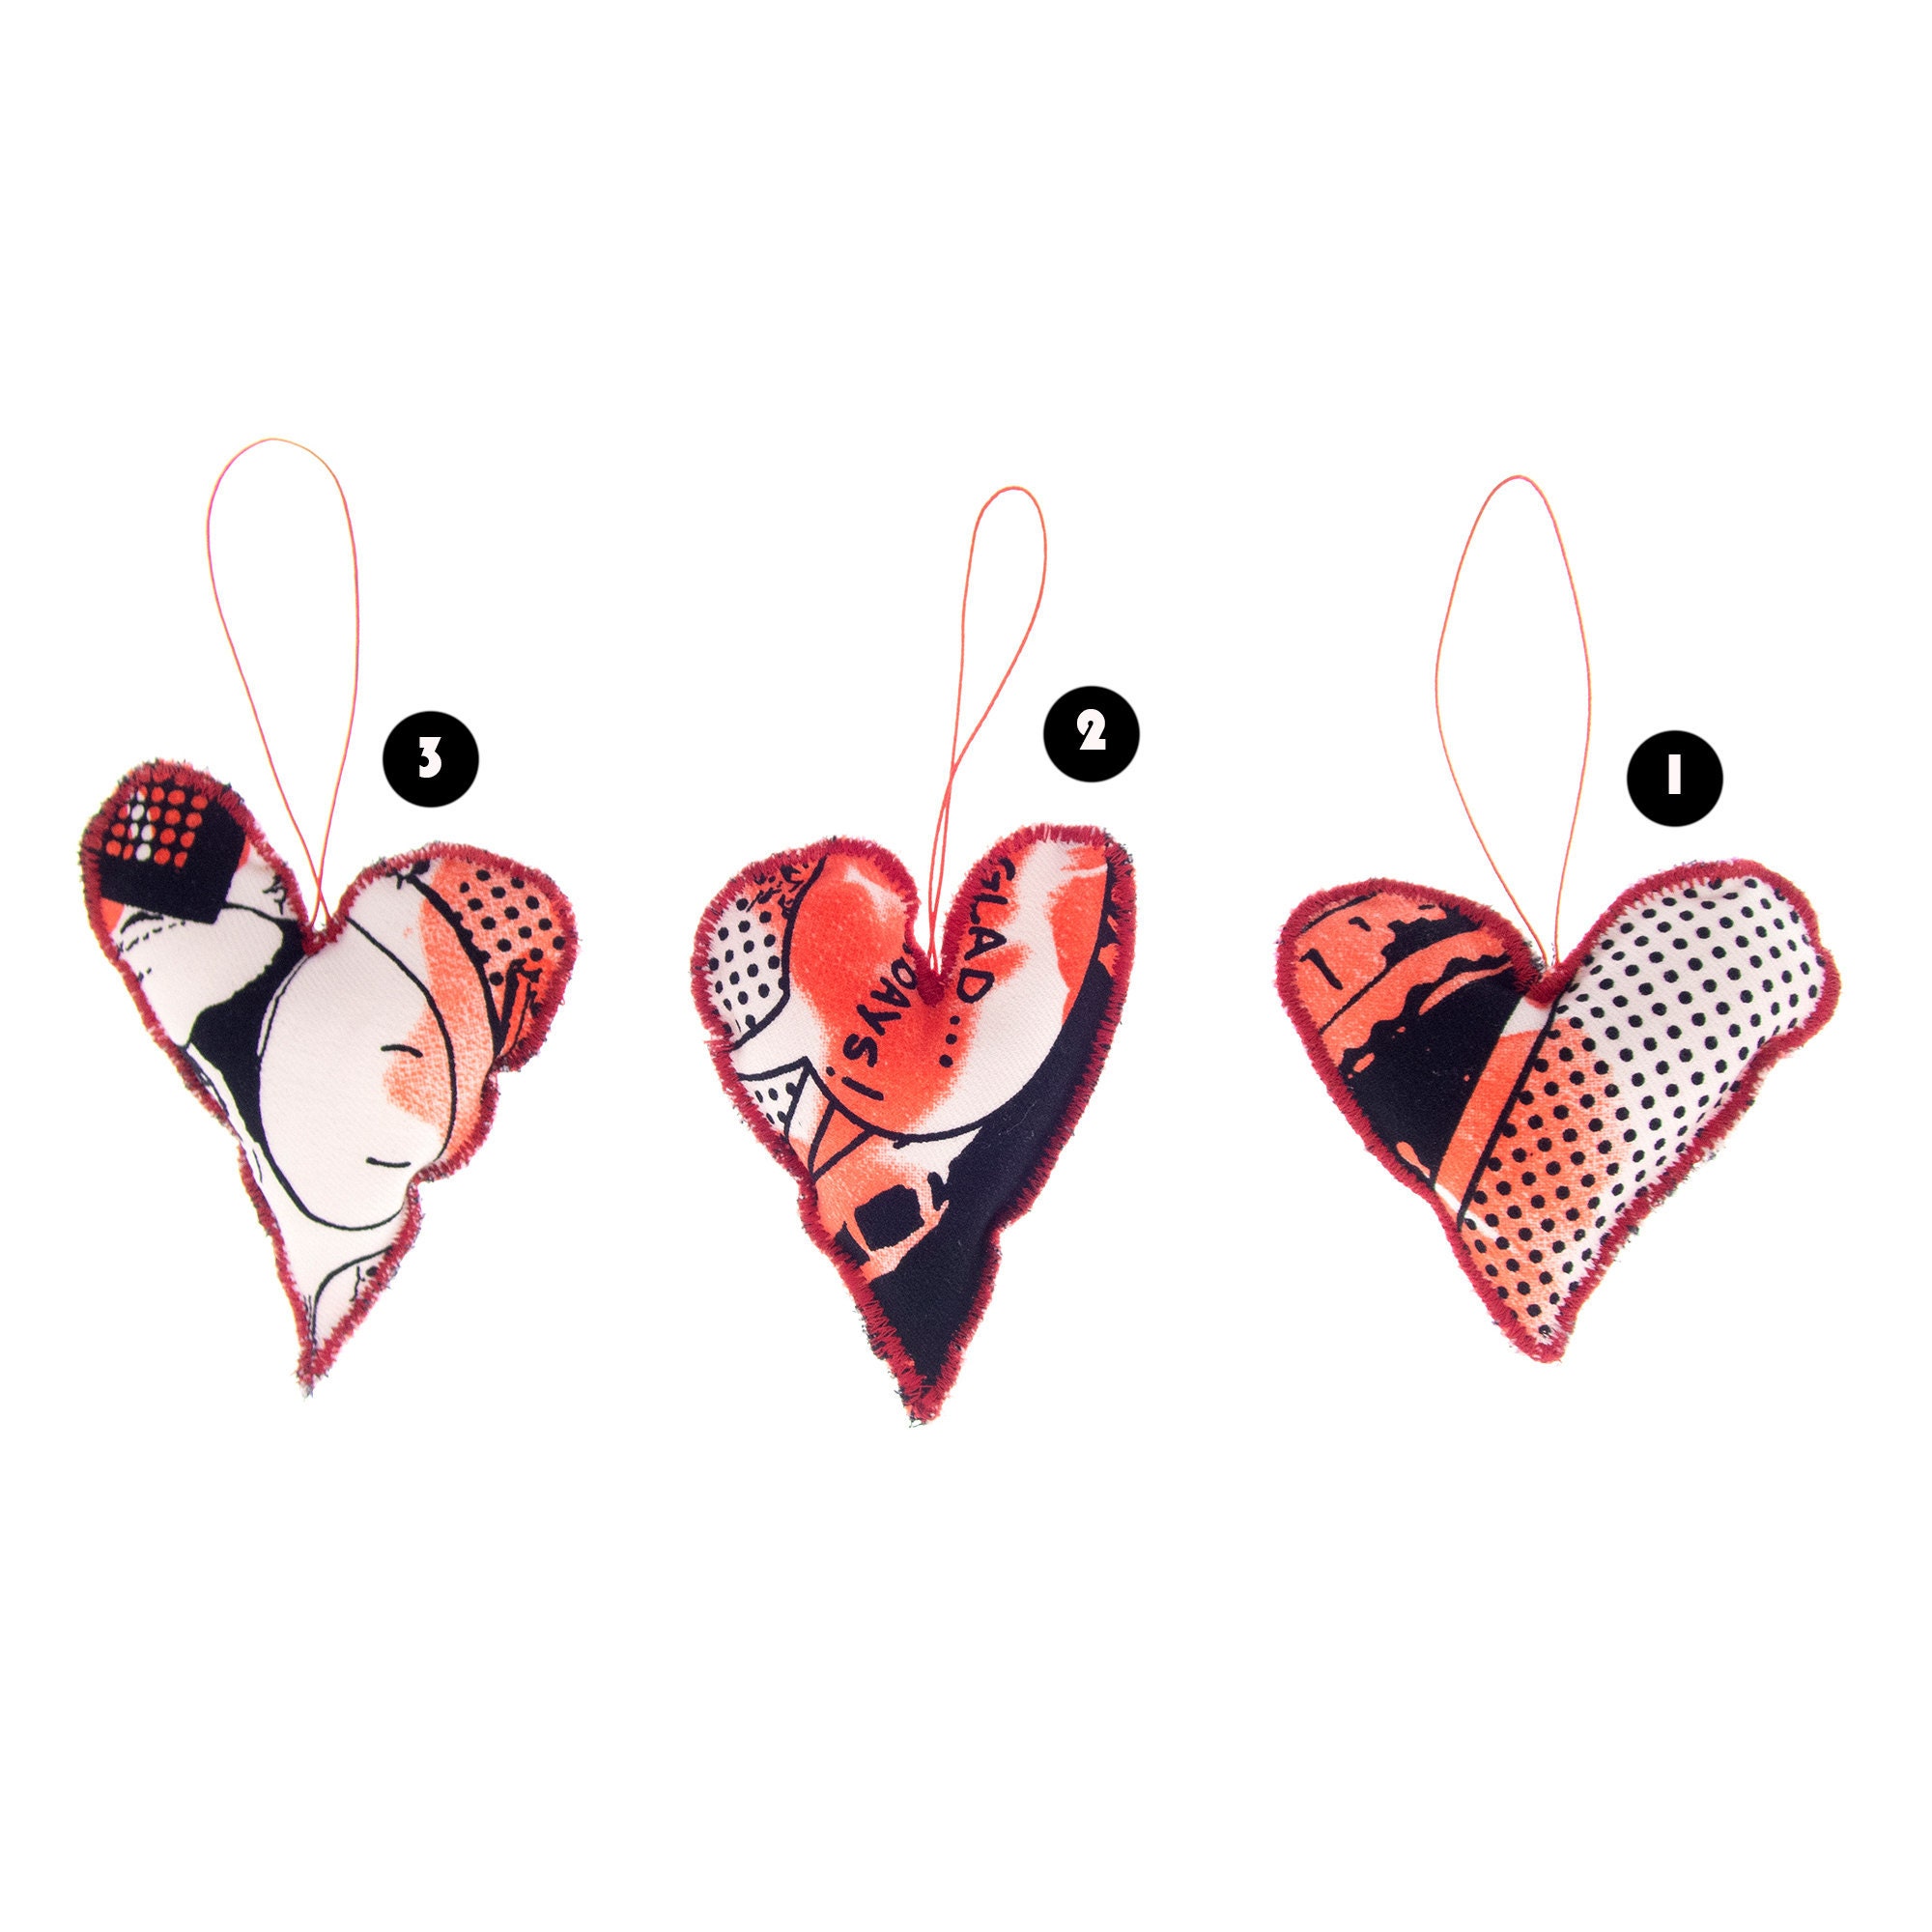 handmade valentines day gift handmade heart of red and black fabric